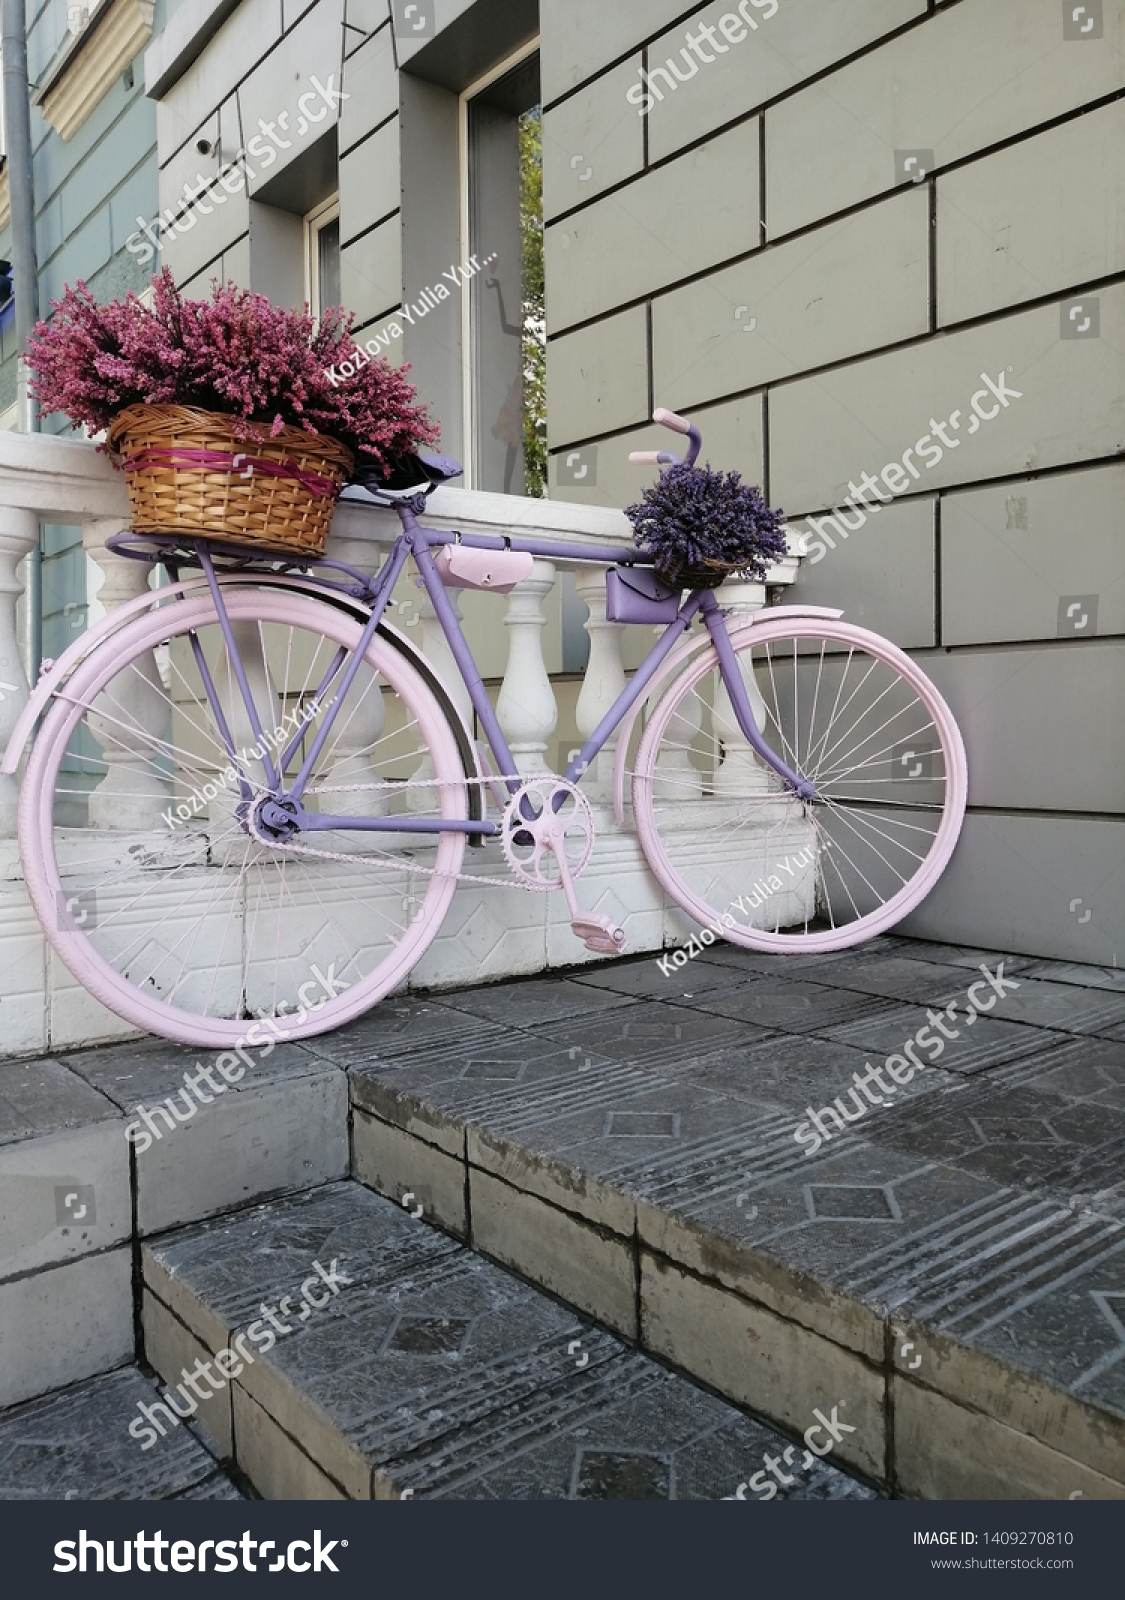 purple bike with basket